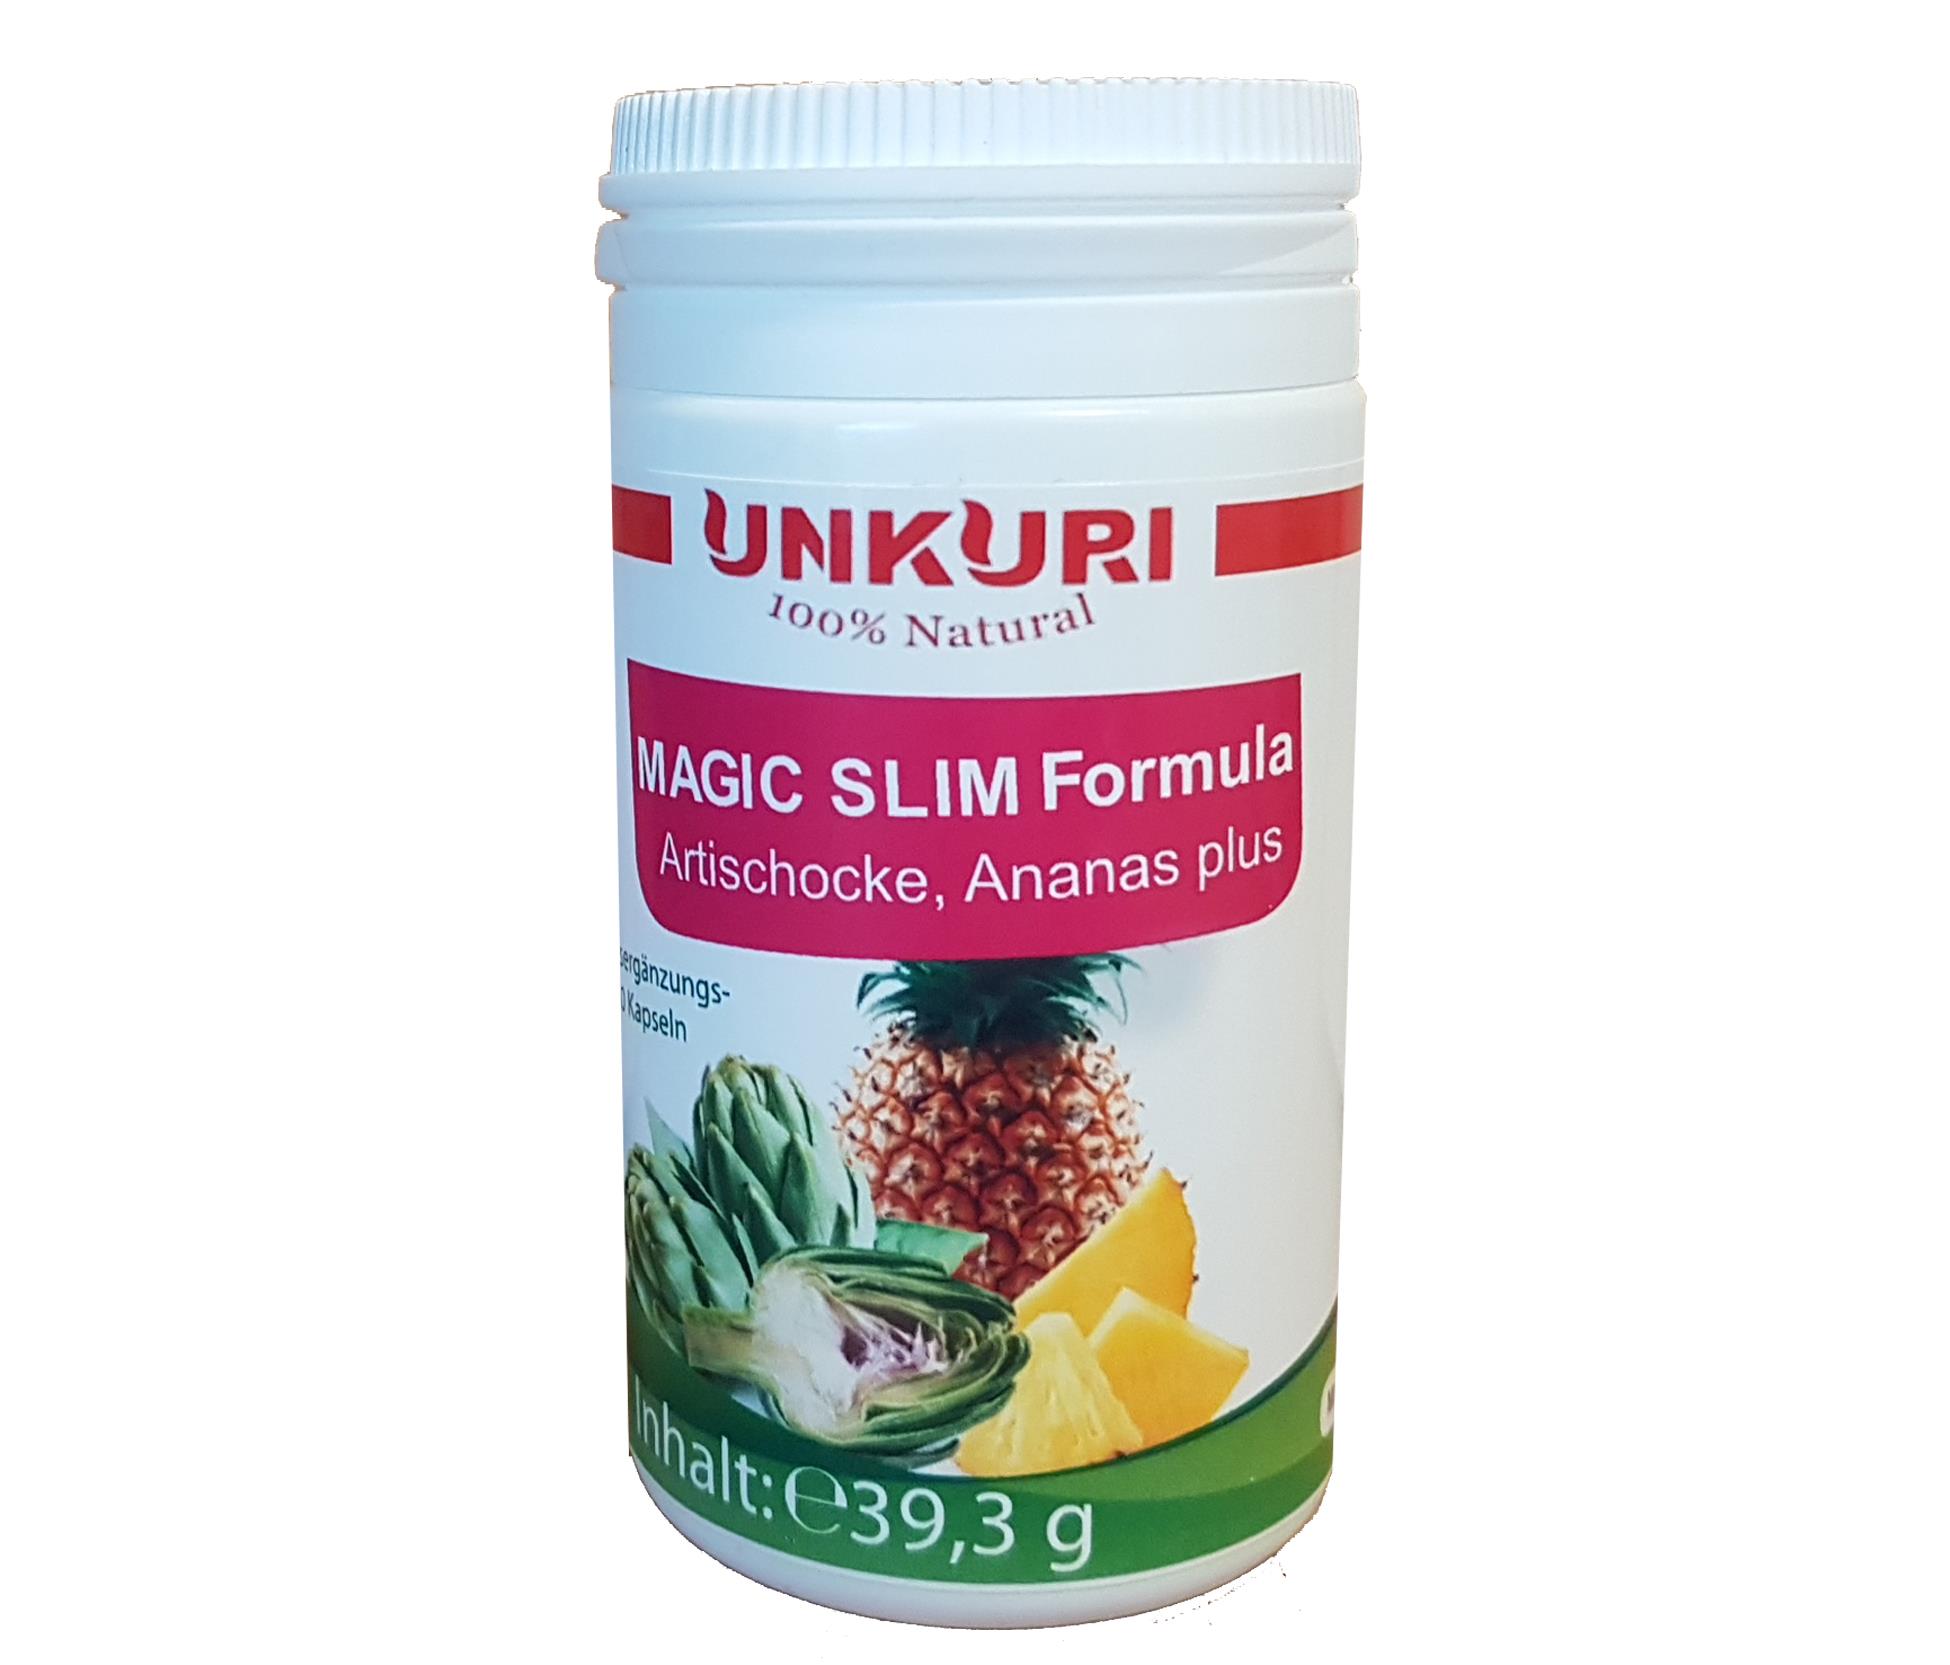 Magic Slim Formula Artischocke, Ananas Plus von Unkuri